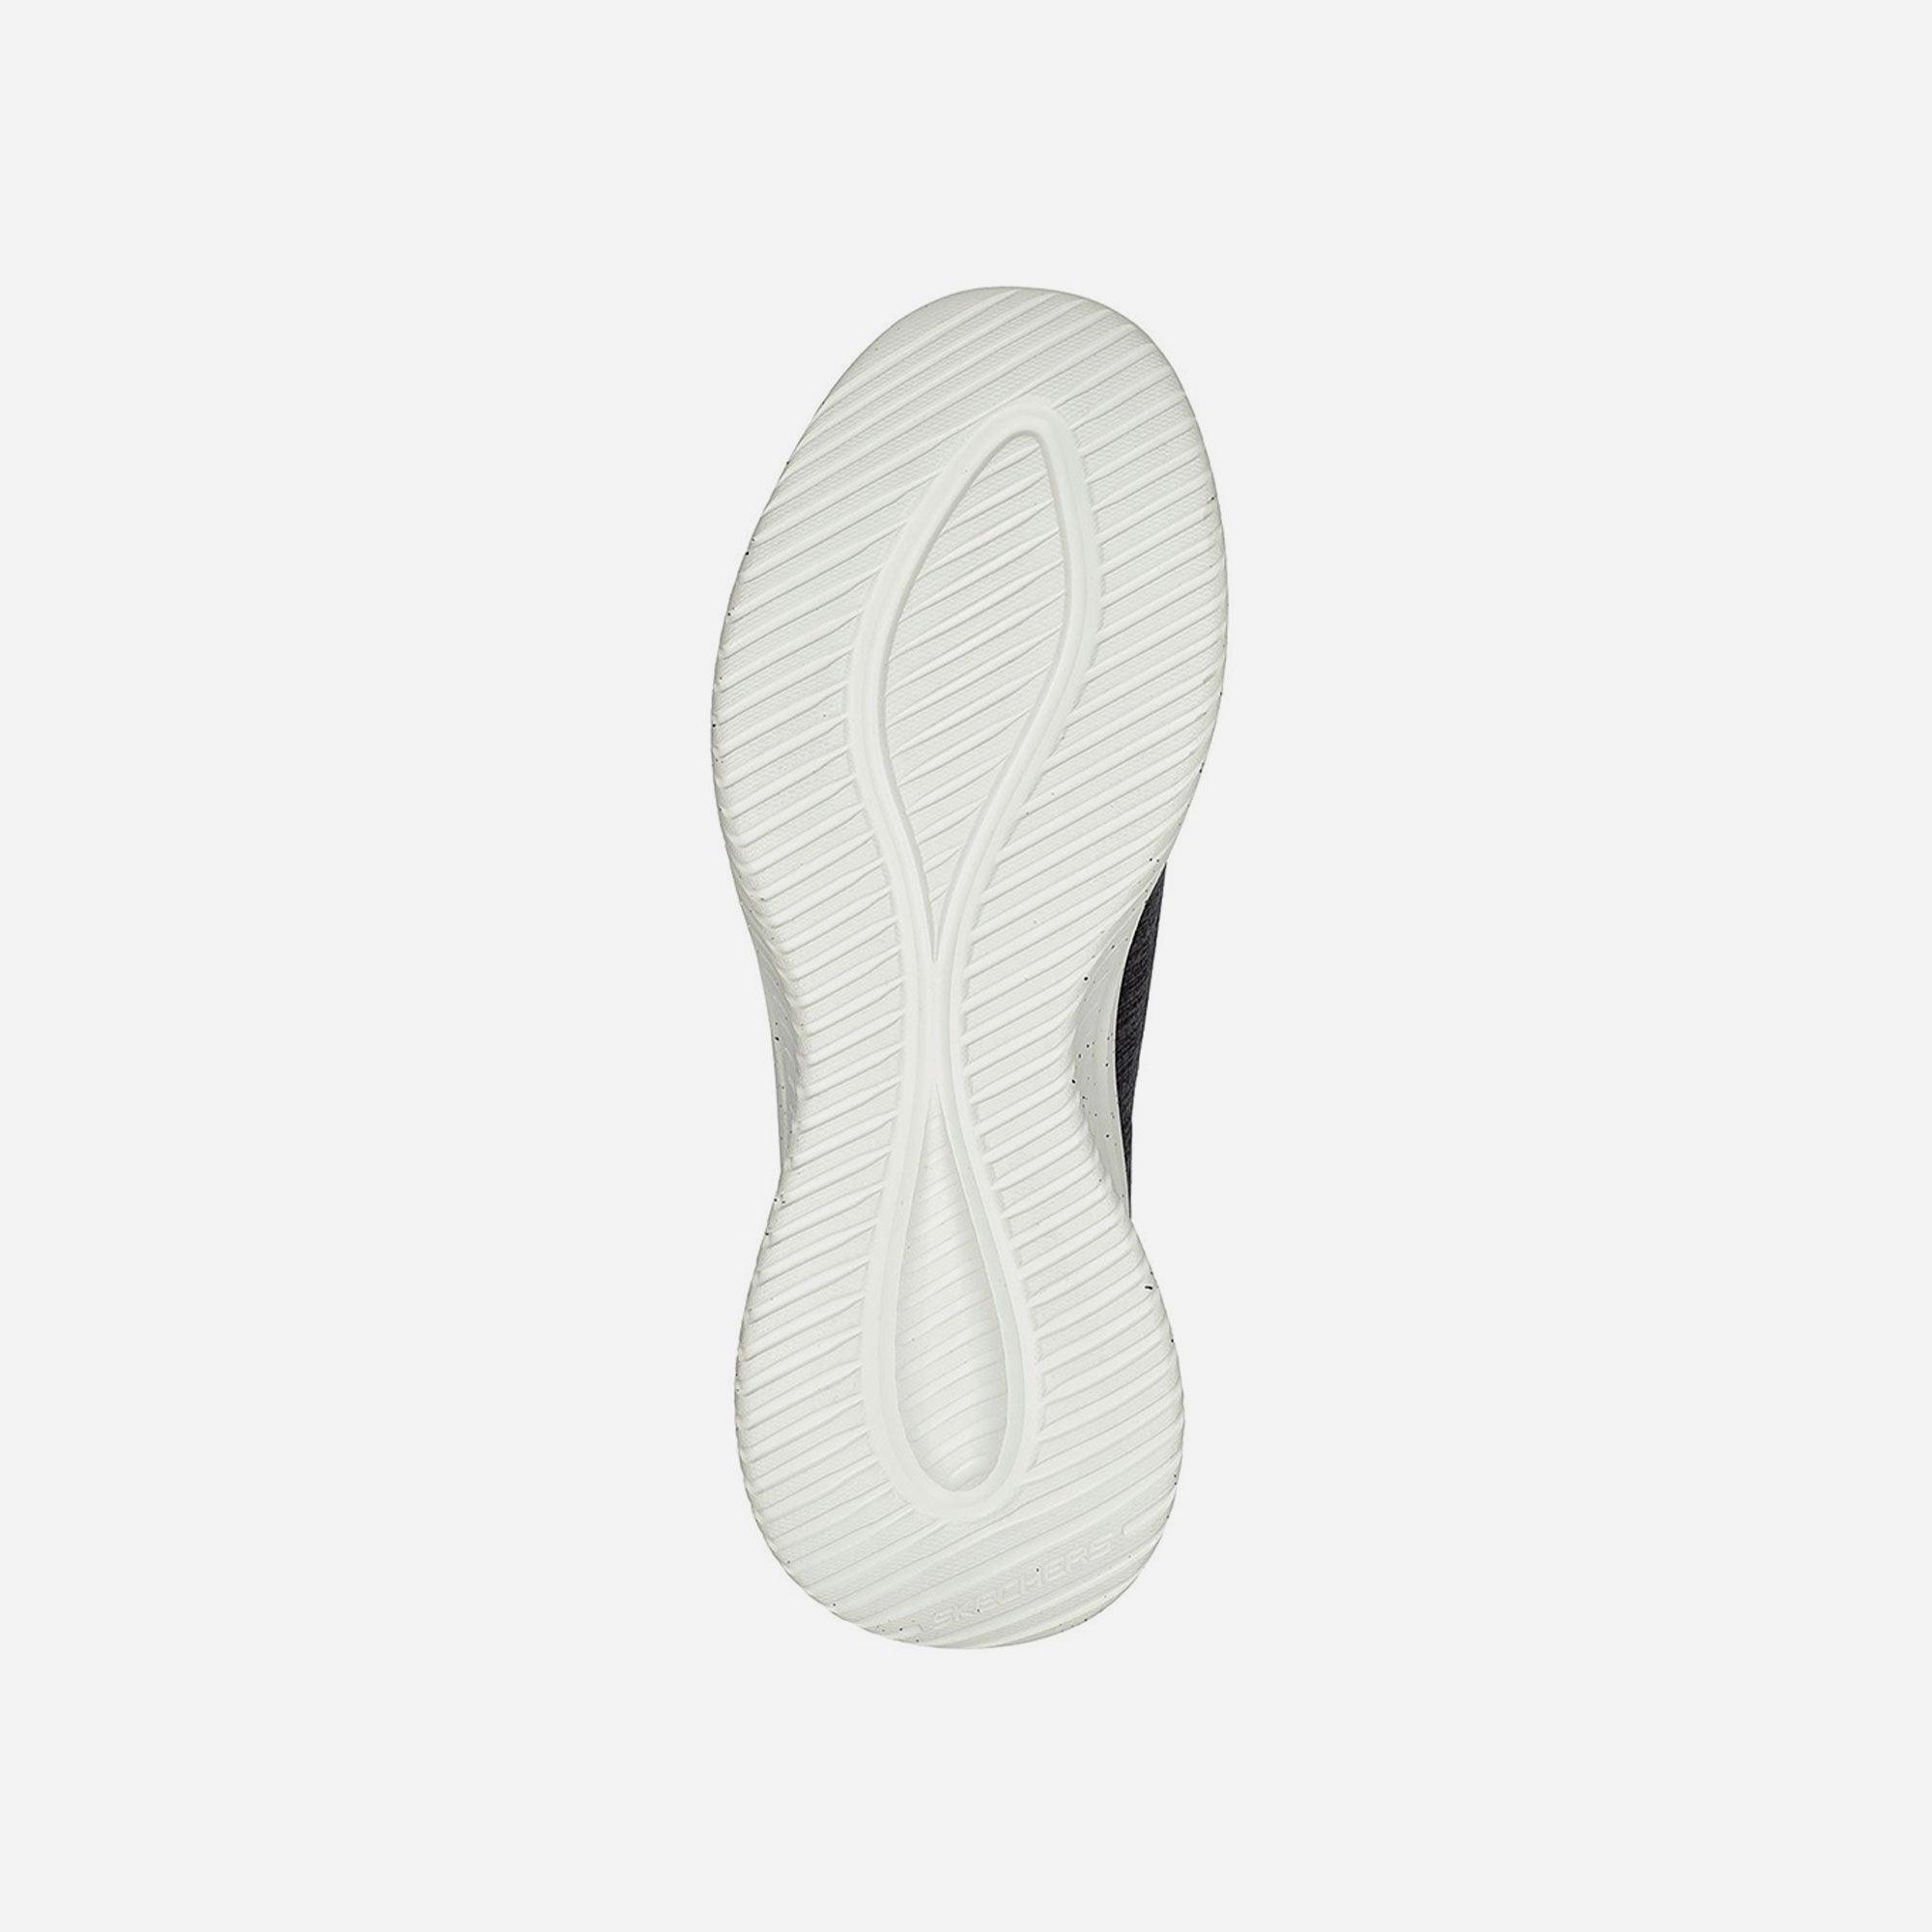 Giày sneaker nam Skechers Ultra Flex 3.0 - 232452-BLK